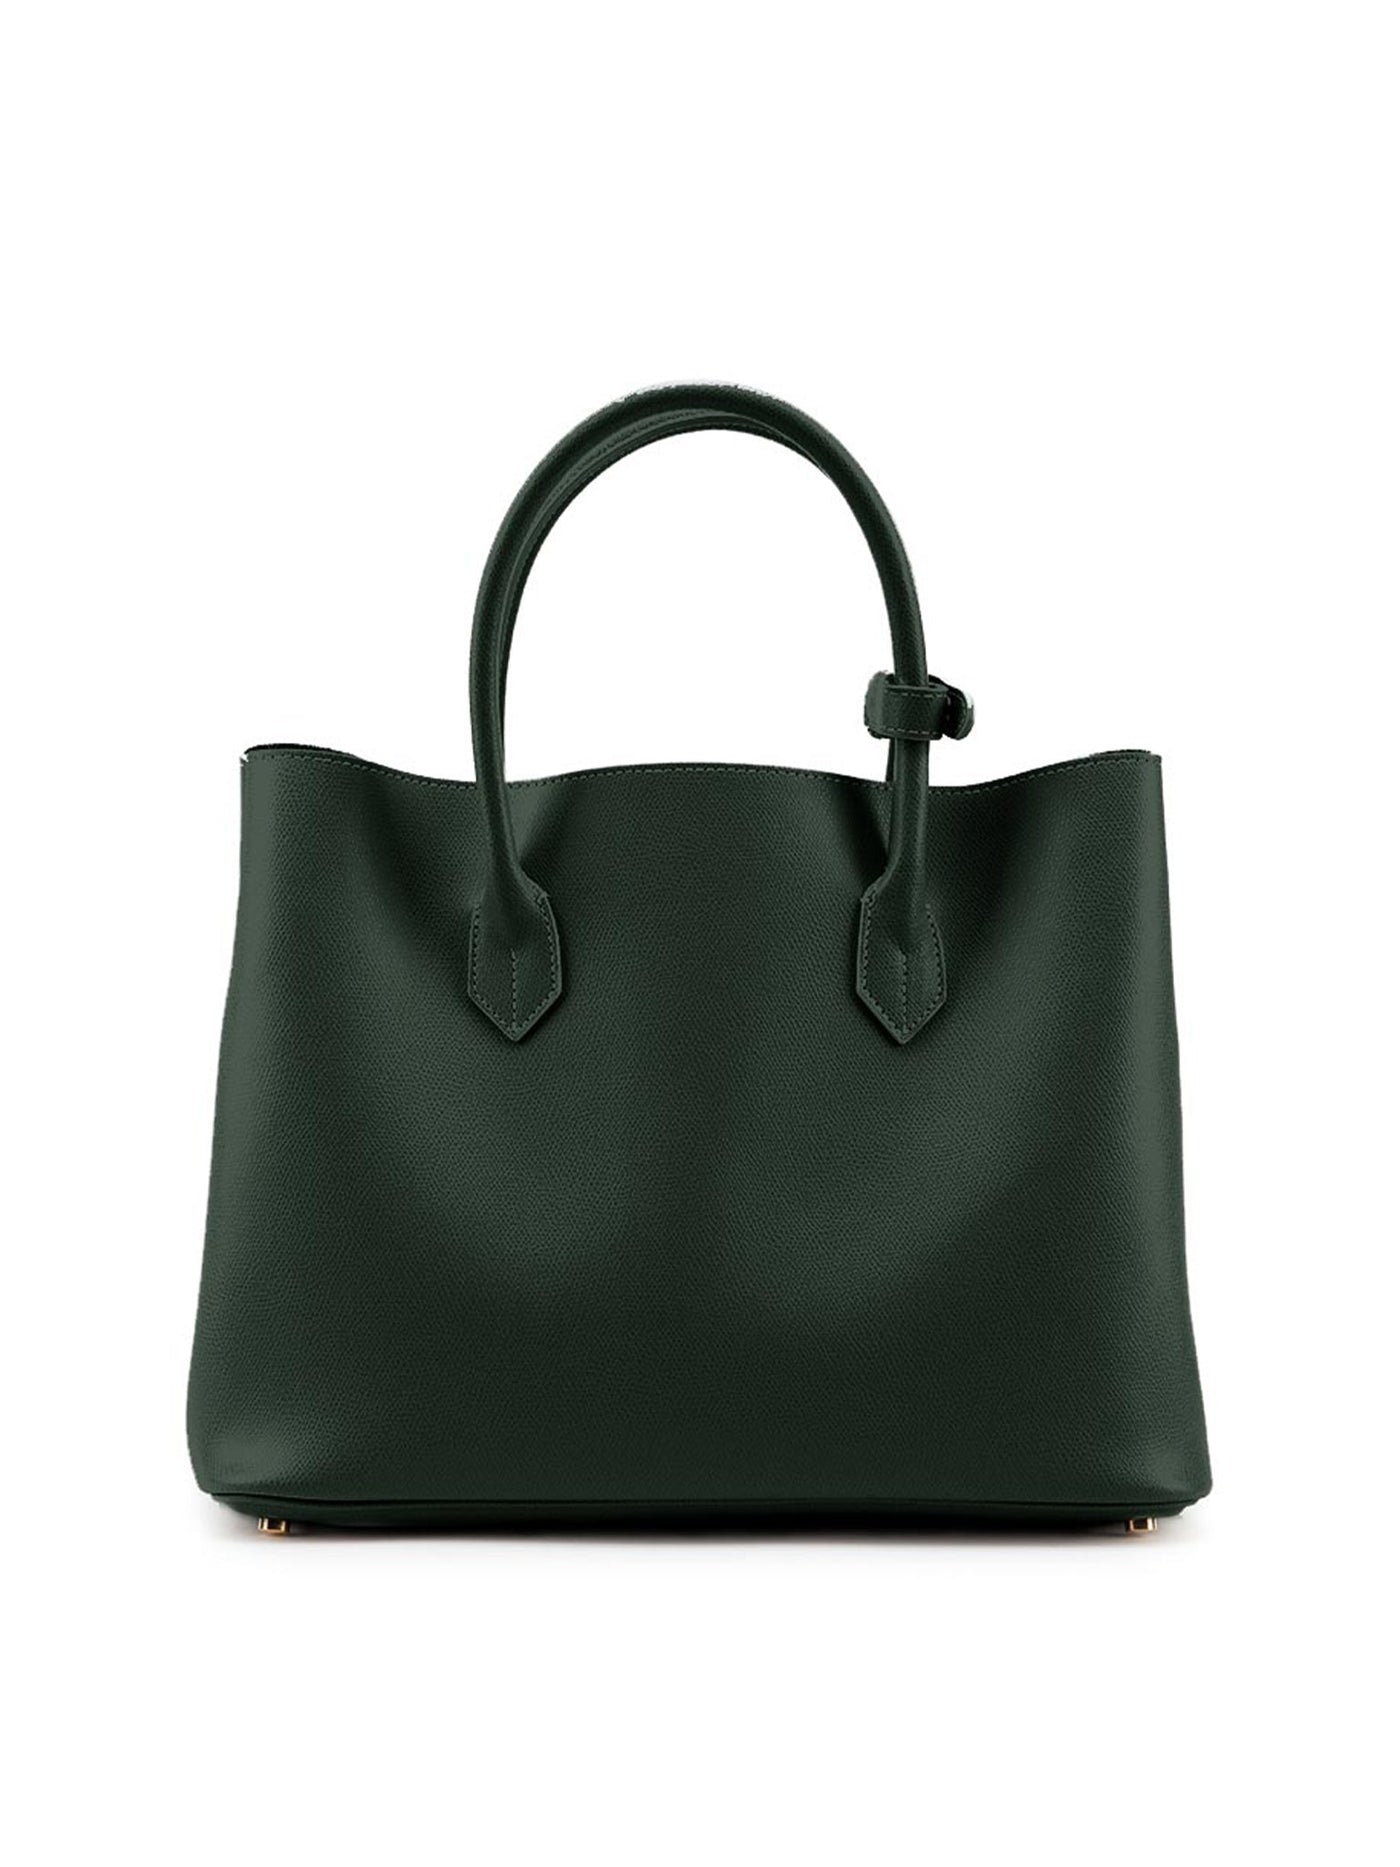 Dark Green Woven Vegan Leather Shopper Bag Large Handbag Soft Purse for  Work | Baginning